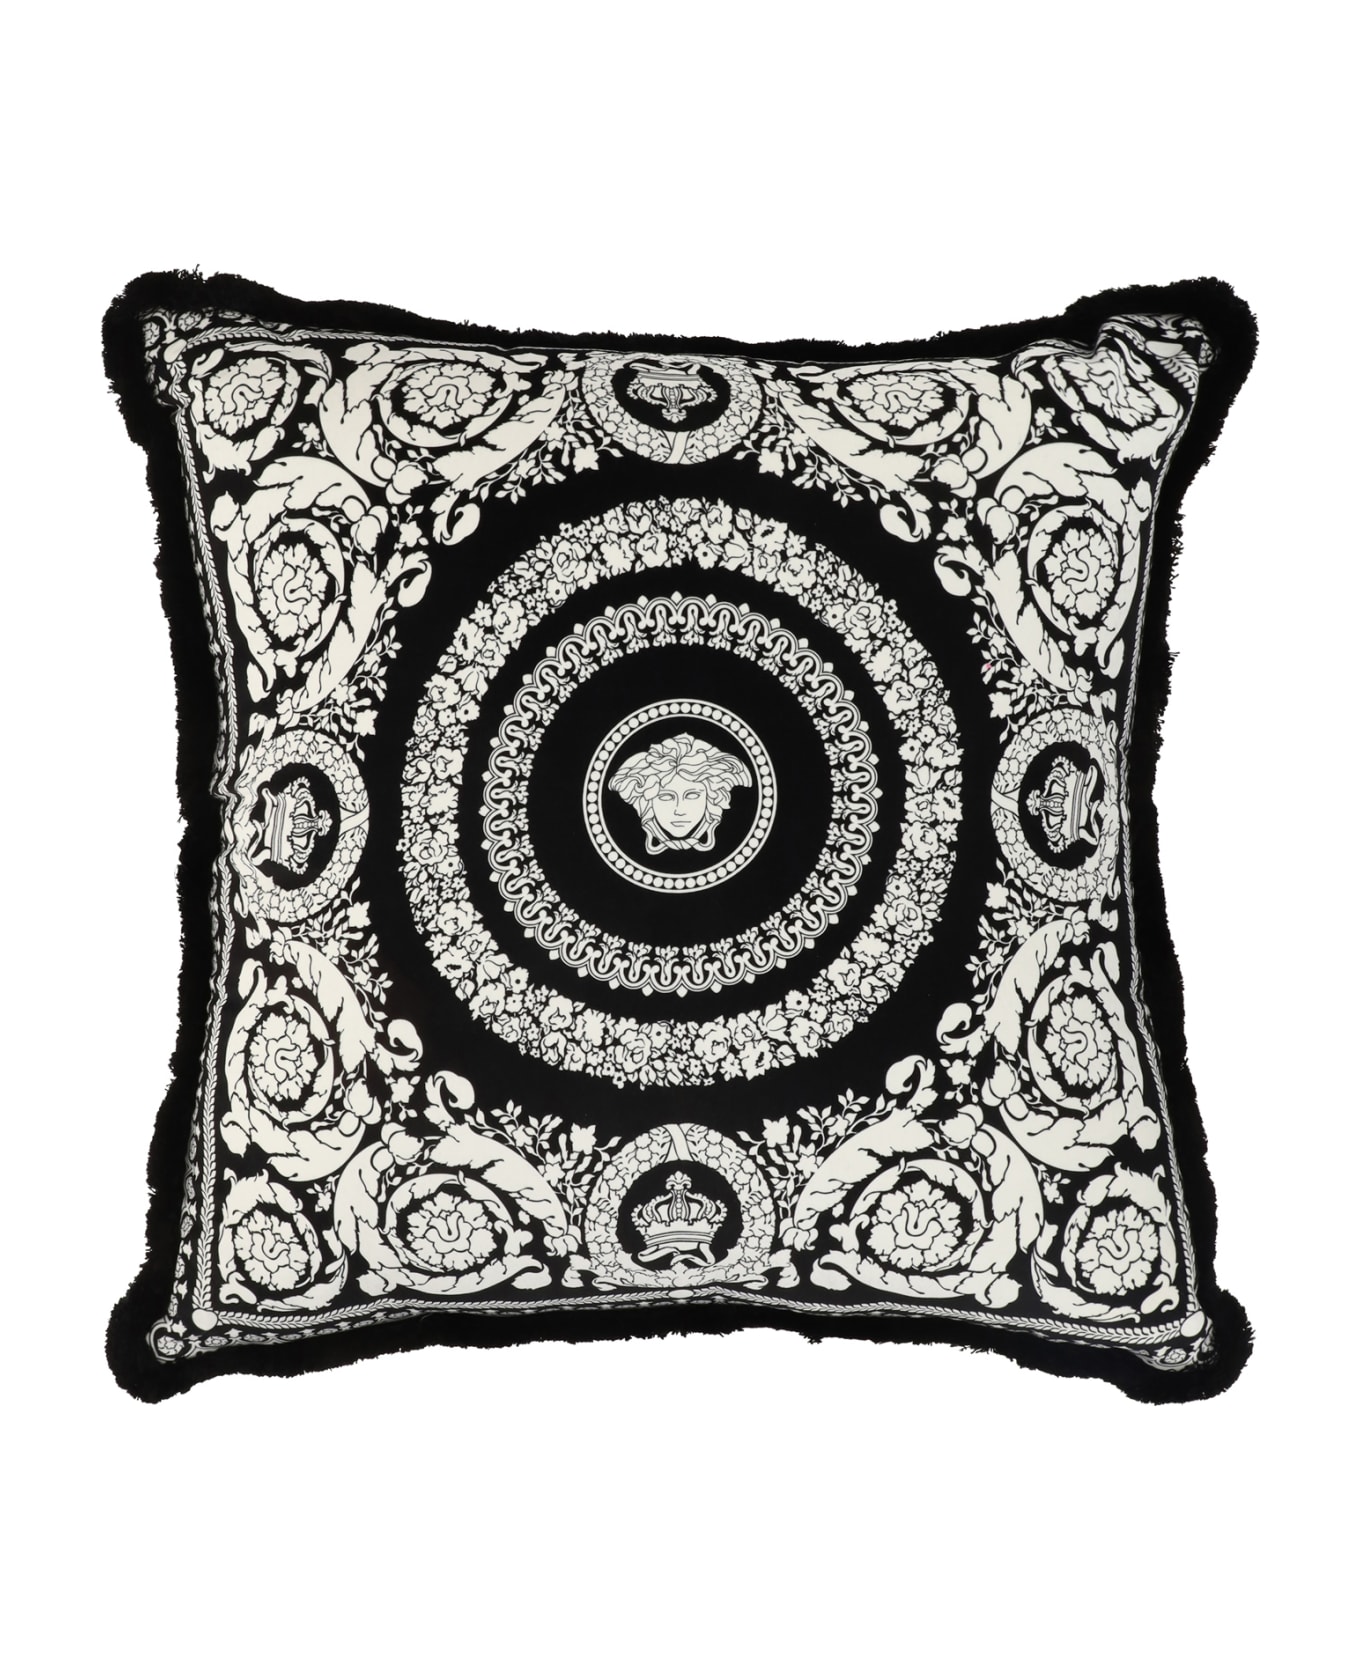 Versace Squared Pillow - Nero/bianco